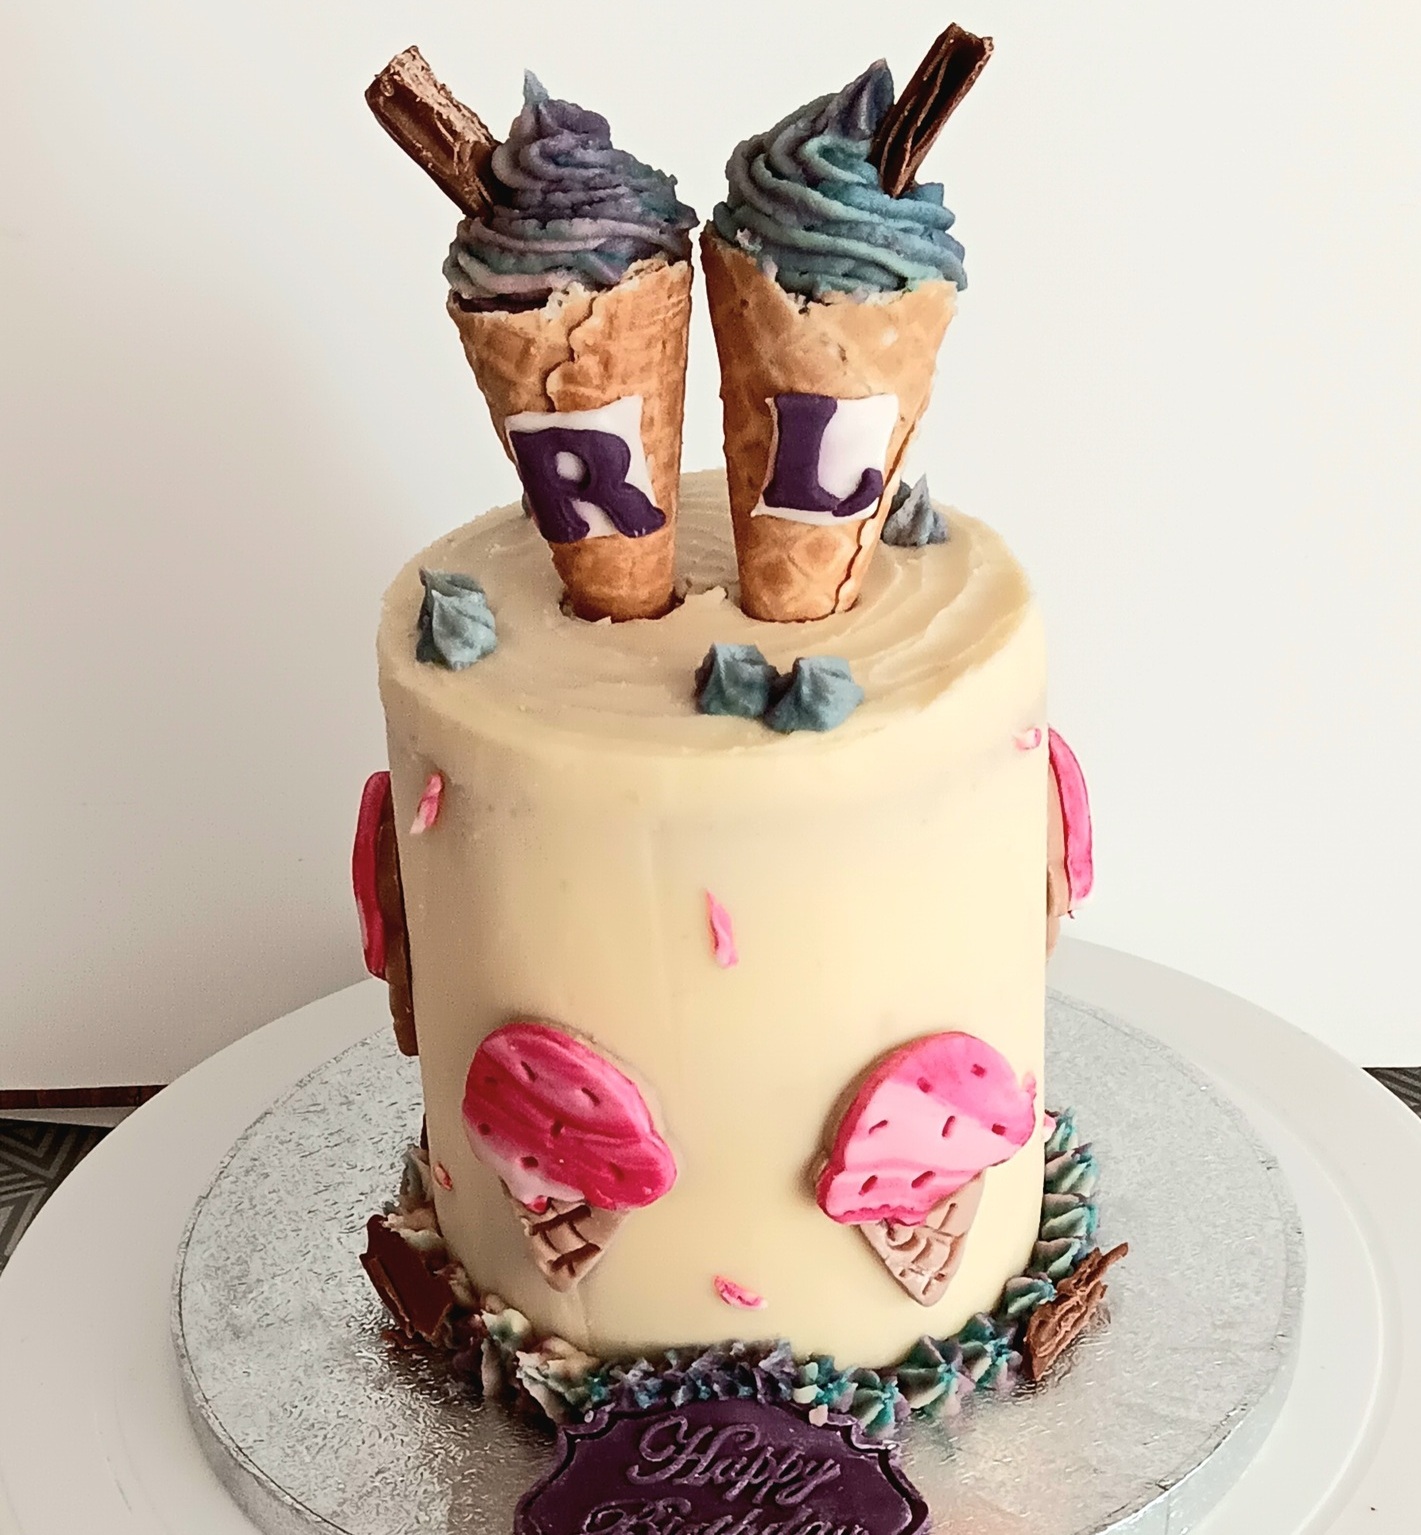 Twin boys "Icecream" inspired birthday cake